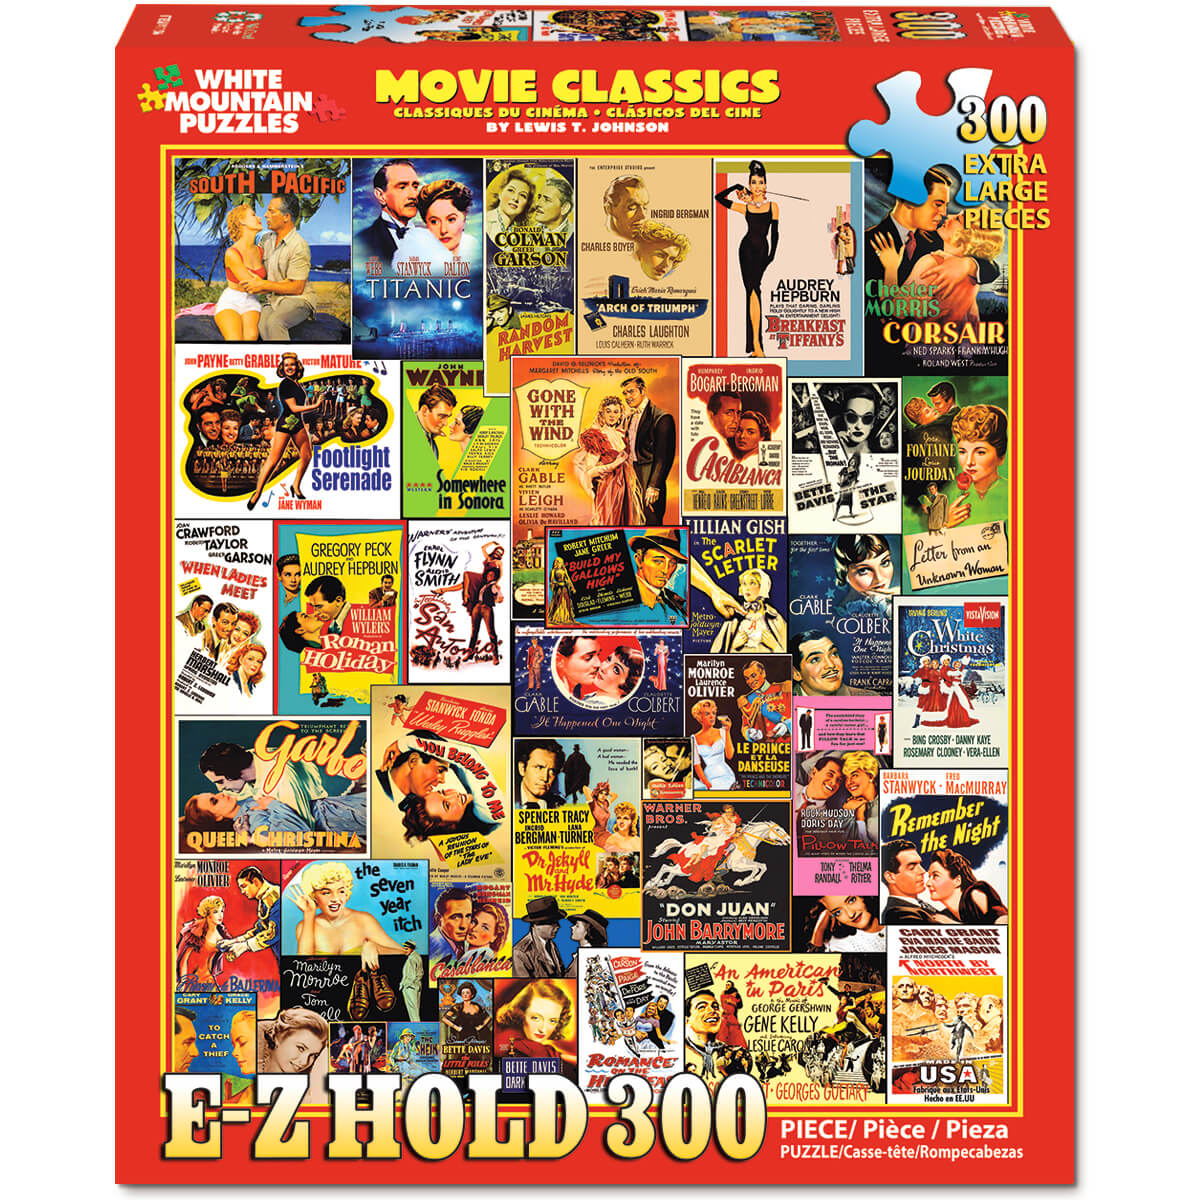 White Mountain Puzzles Movie Classics 300 Piece Jigsaw Puzzle